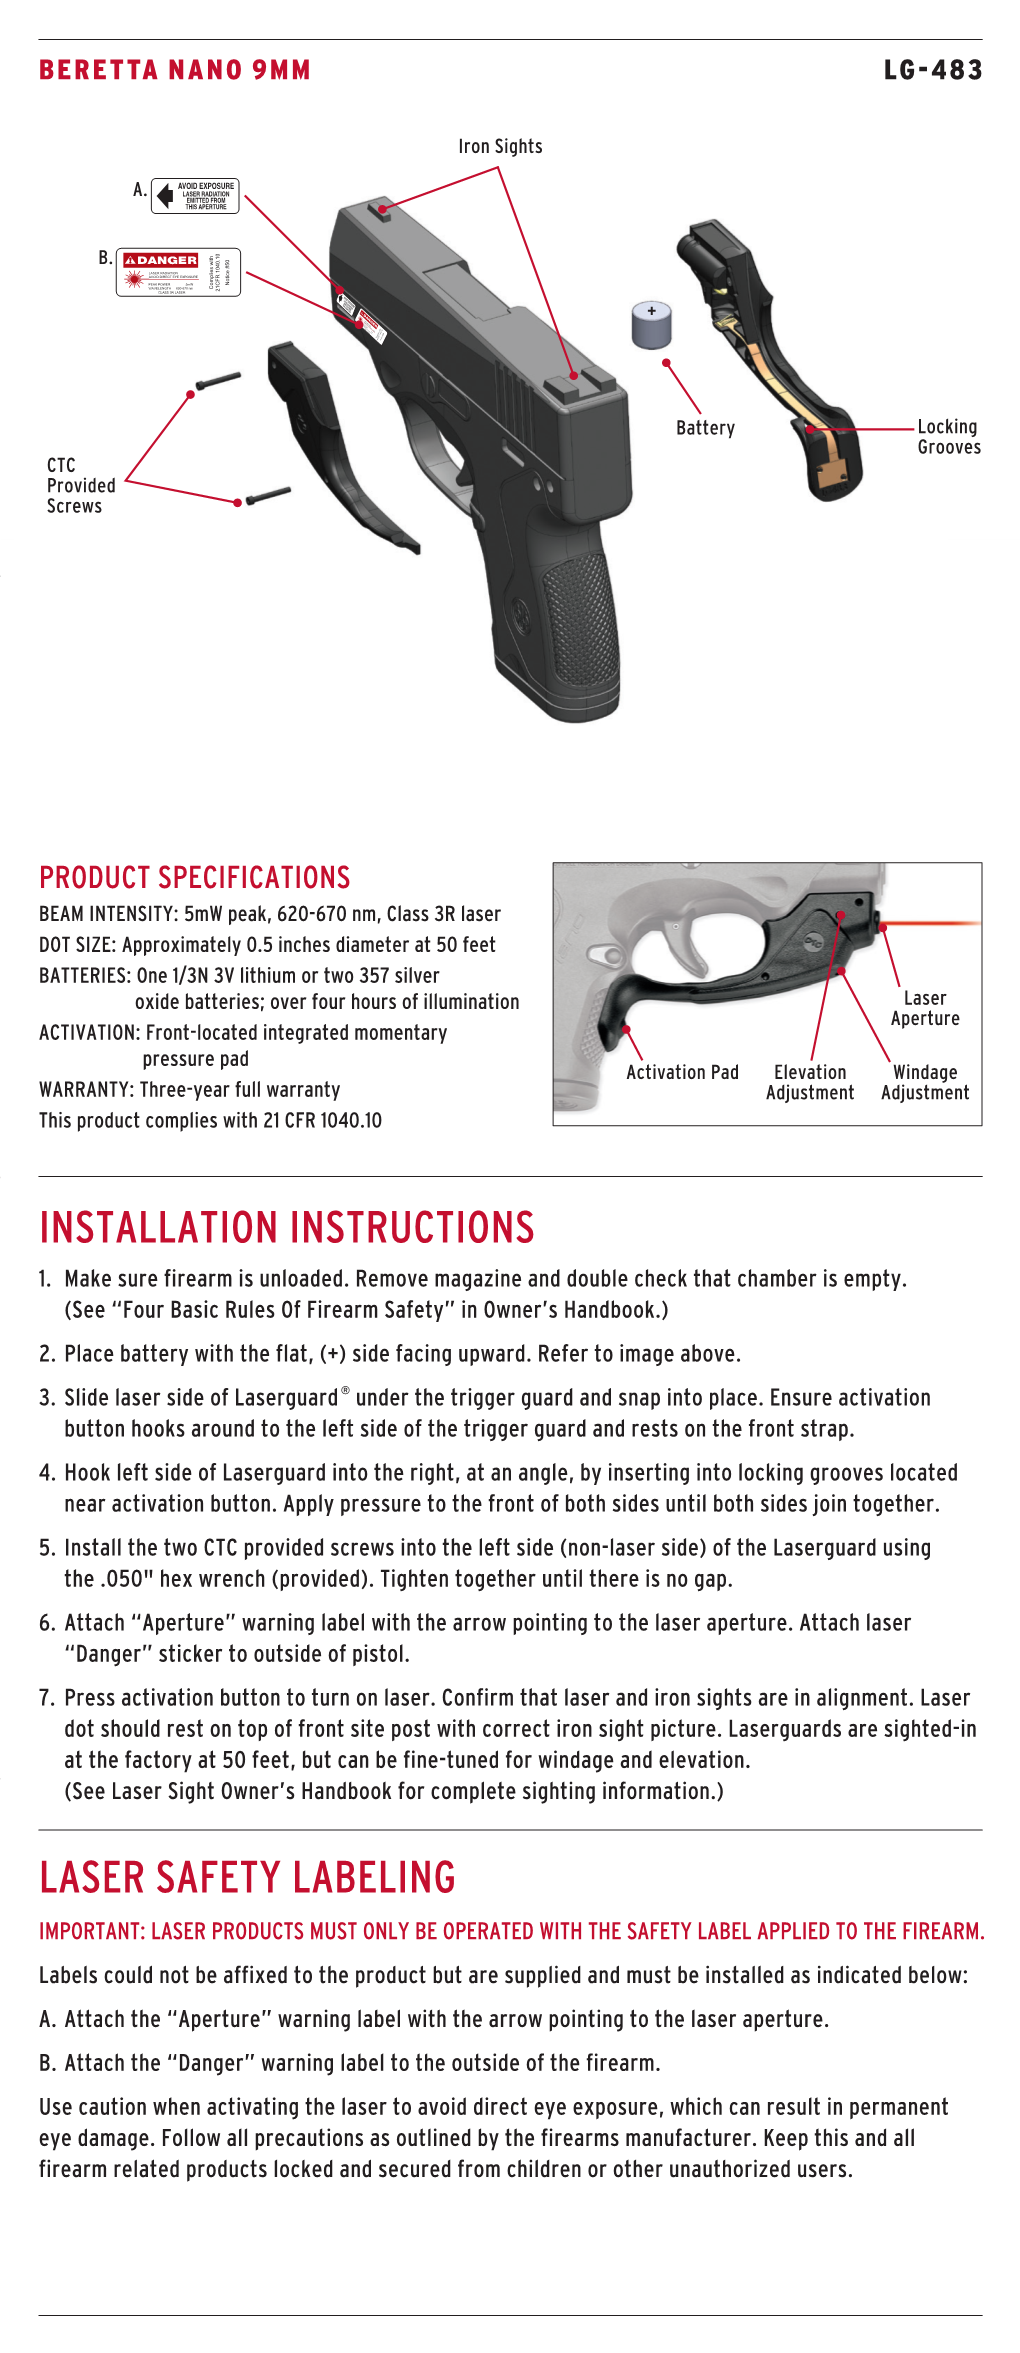 Installation Instructions Laser Safety